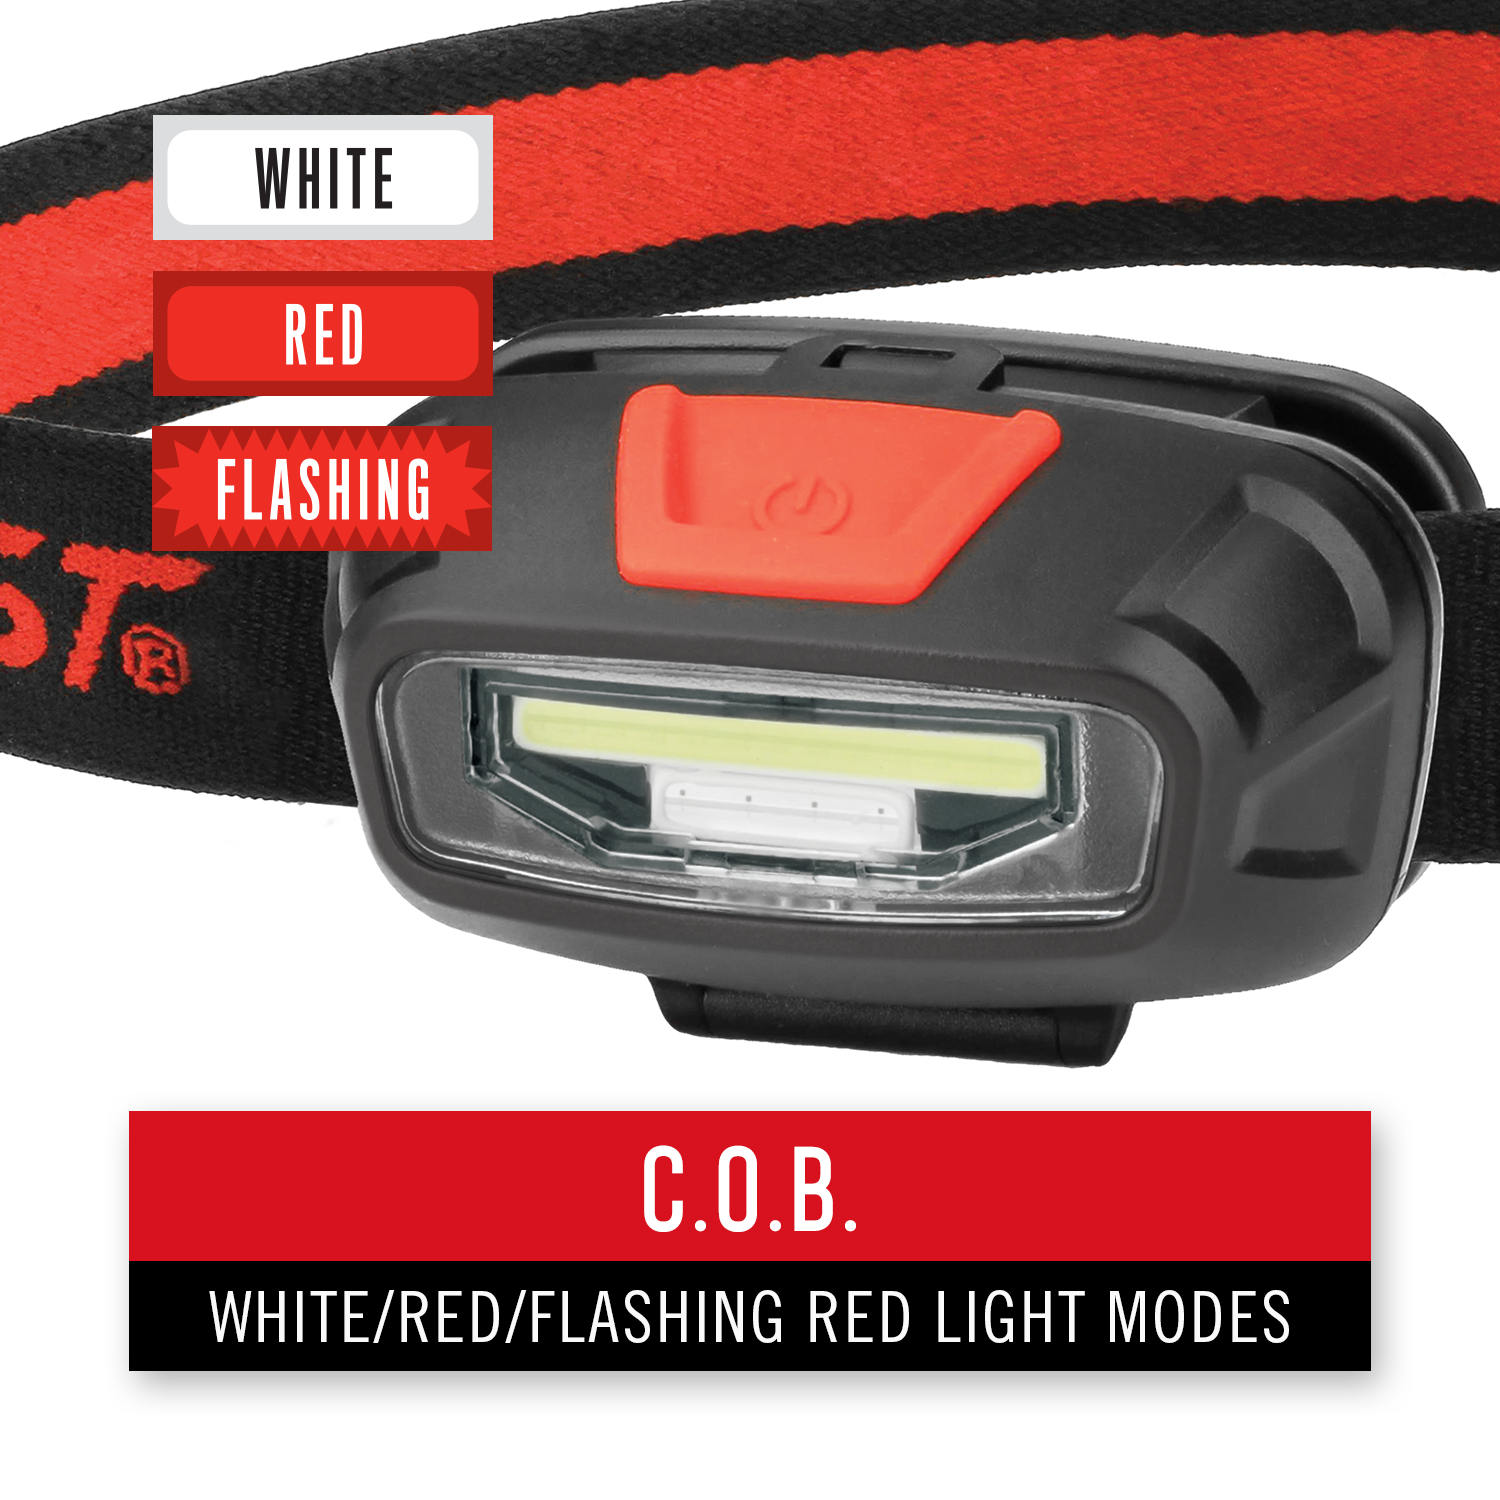 COAST FL13 250 Lumen Dual Color LED Headlamp – COAST Products